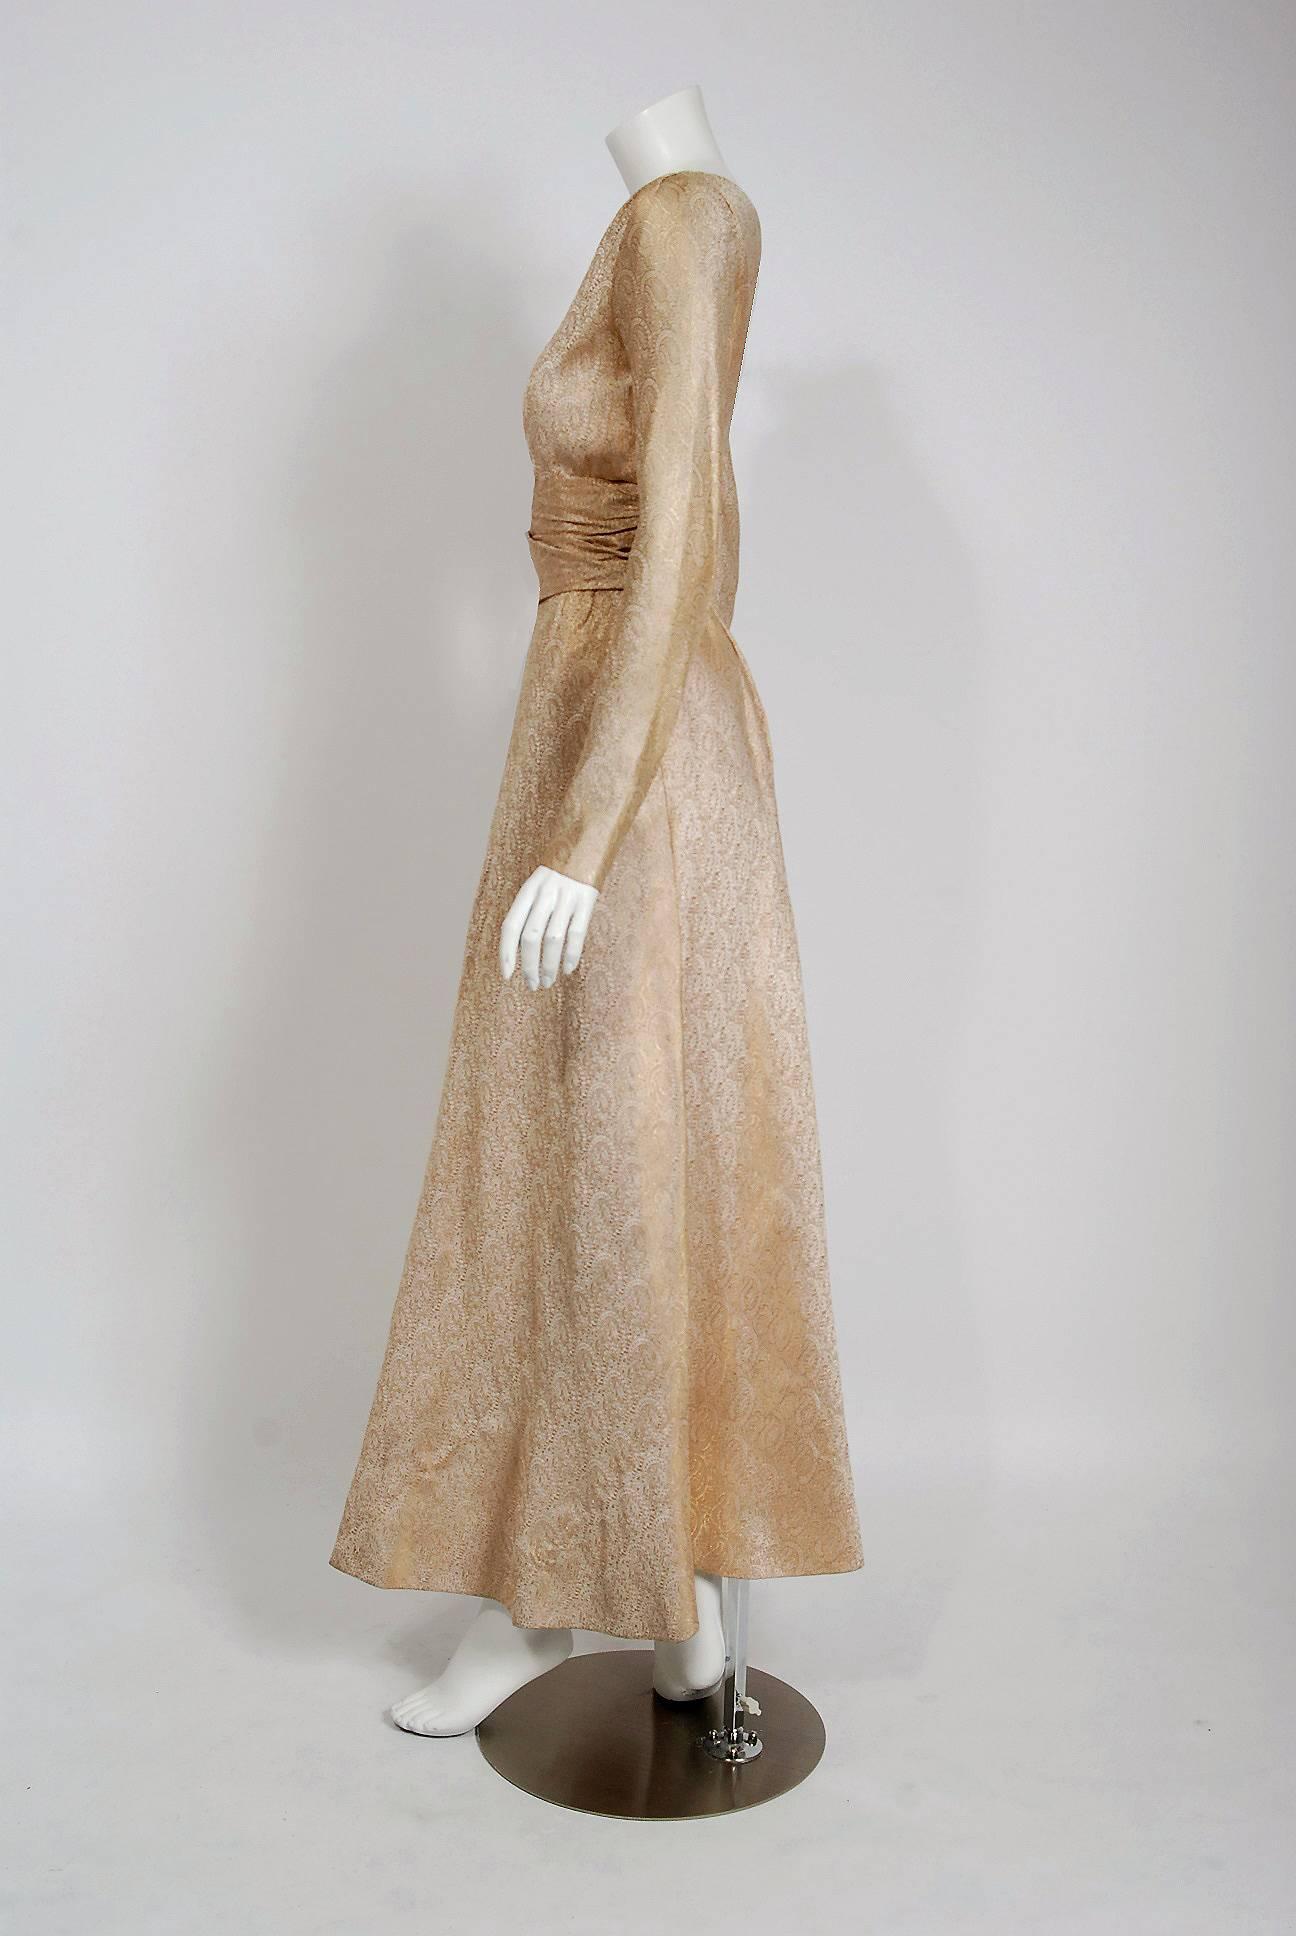 givenchy vintage dress